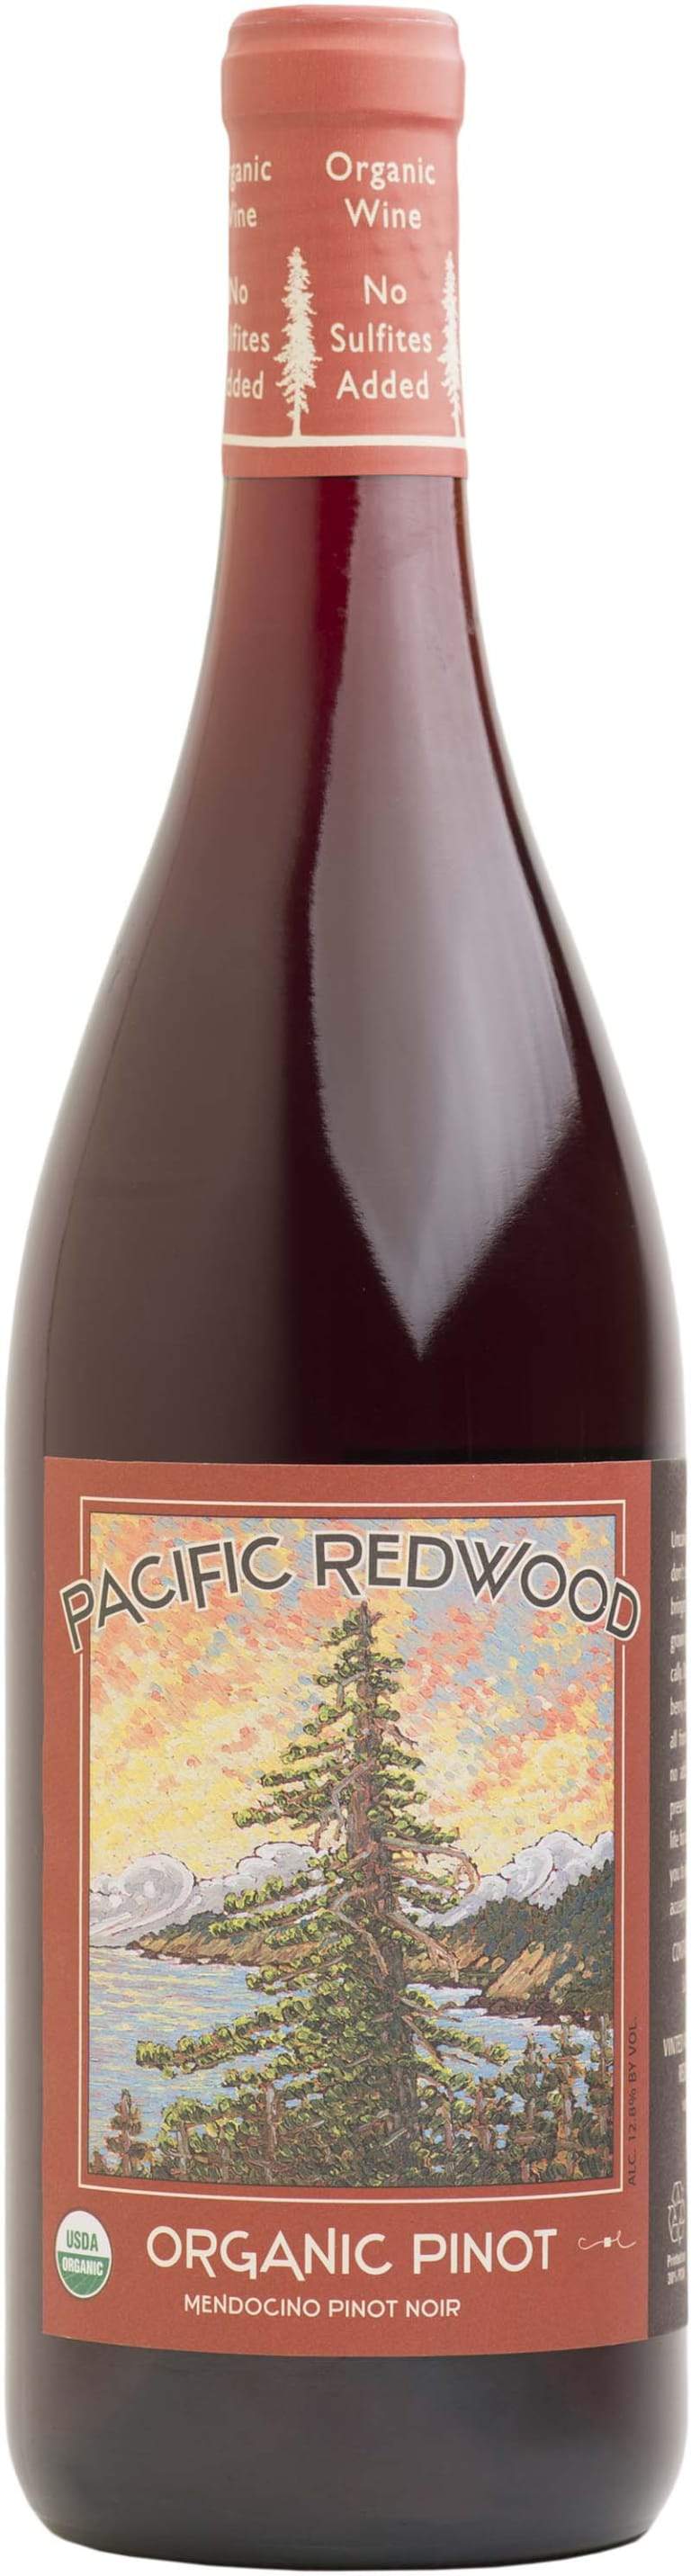 Pacific Redwood Organic Pinot Noir 2018